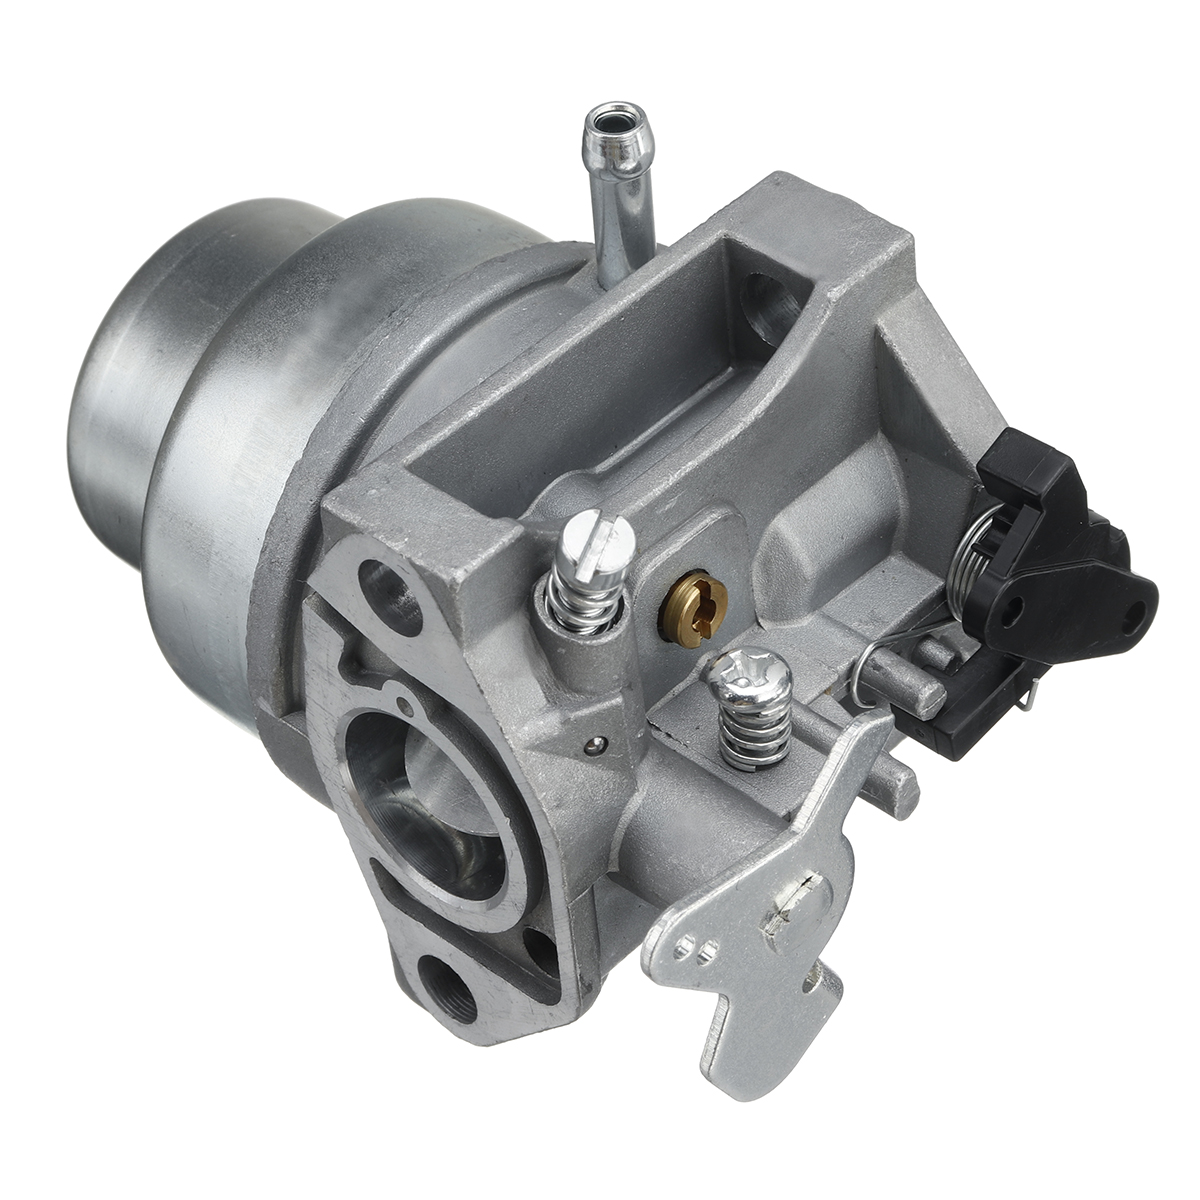 Carburetor-Intake-Kit-Air-Filter-Gaskets-with-Fuel-Line-for-Honda-GCV160-GCV135-Mower-Engine-HRU19R--1842970-6